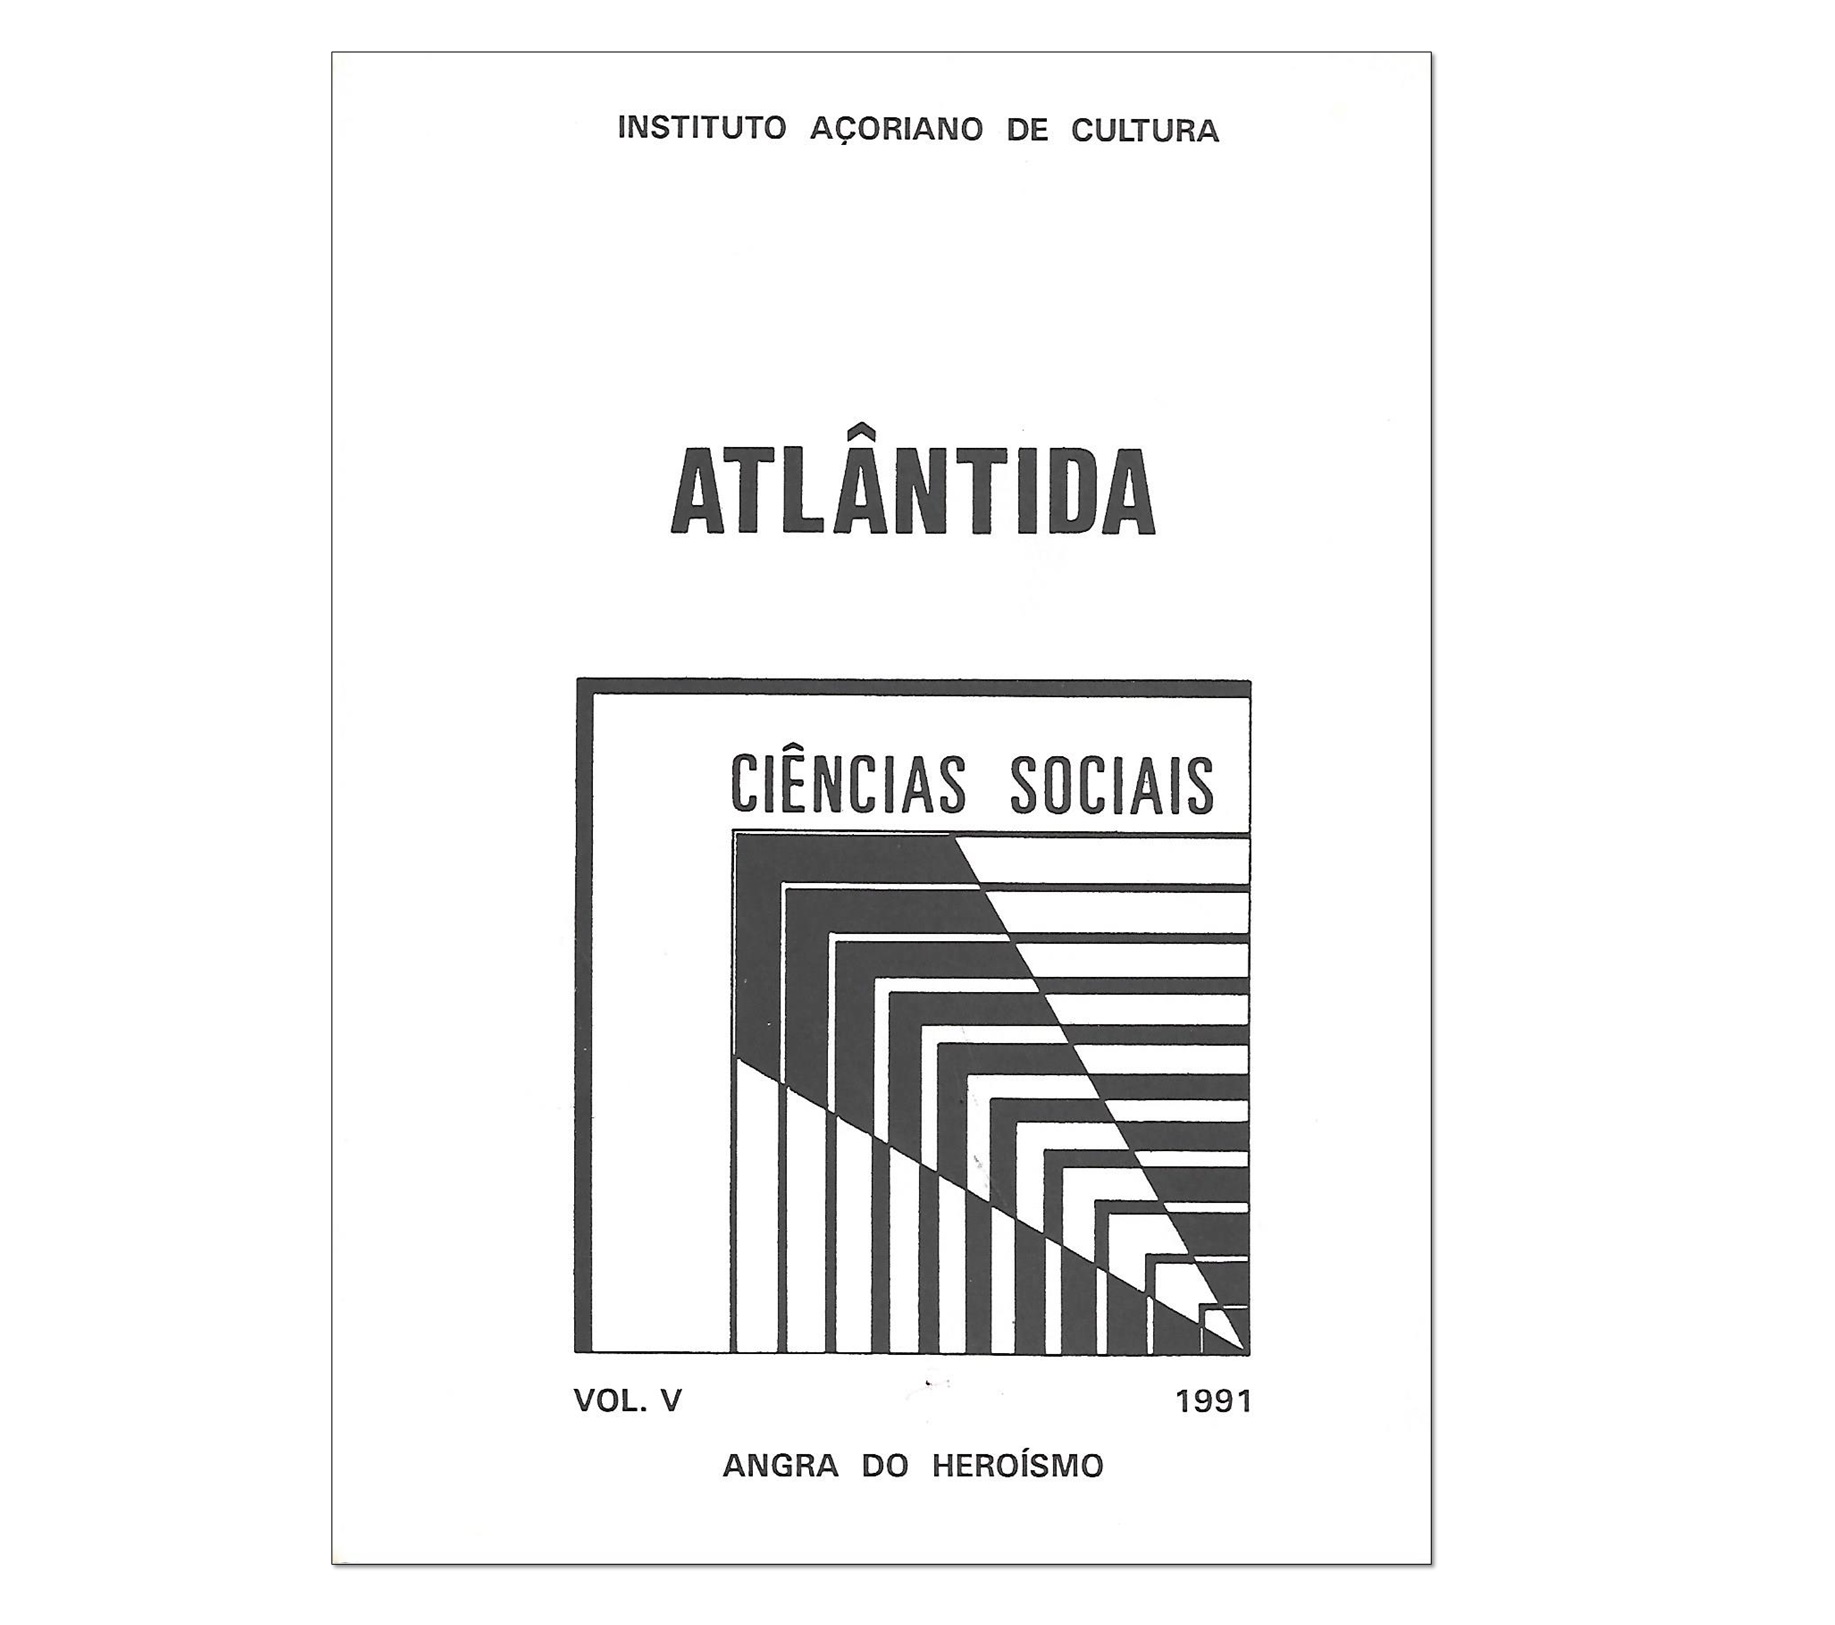 ATLÂNTIDA: CIÊNCIAS SOCIAIS. VOL. V, 1991.